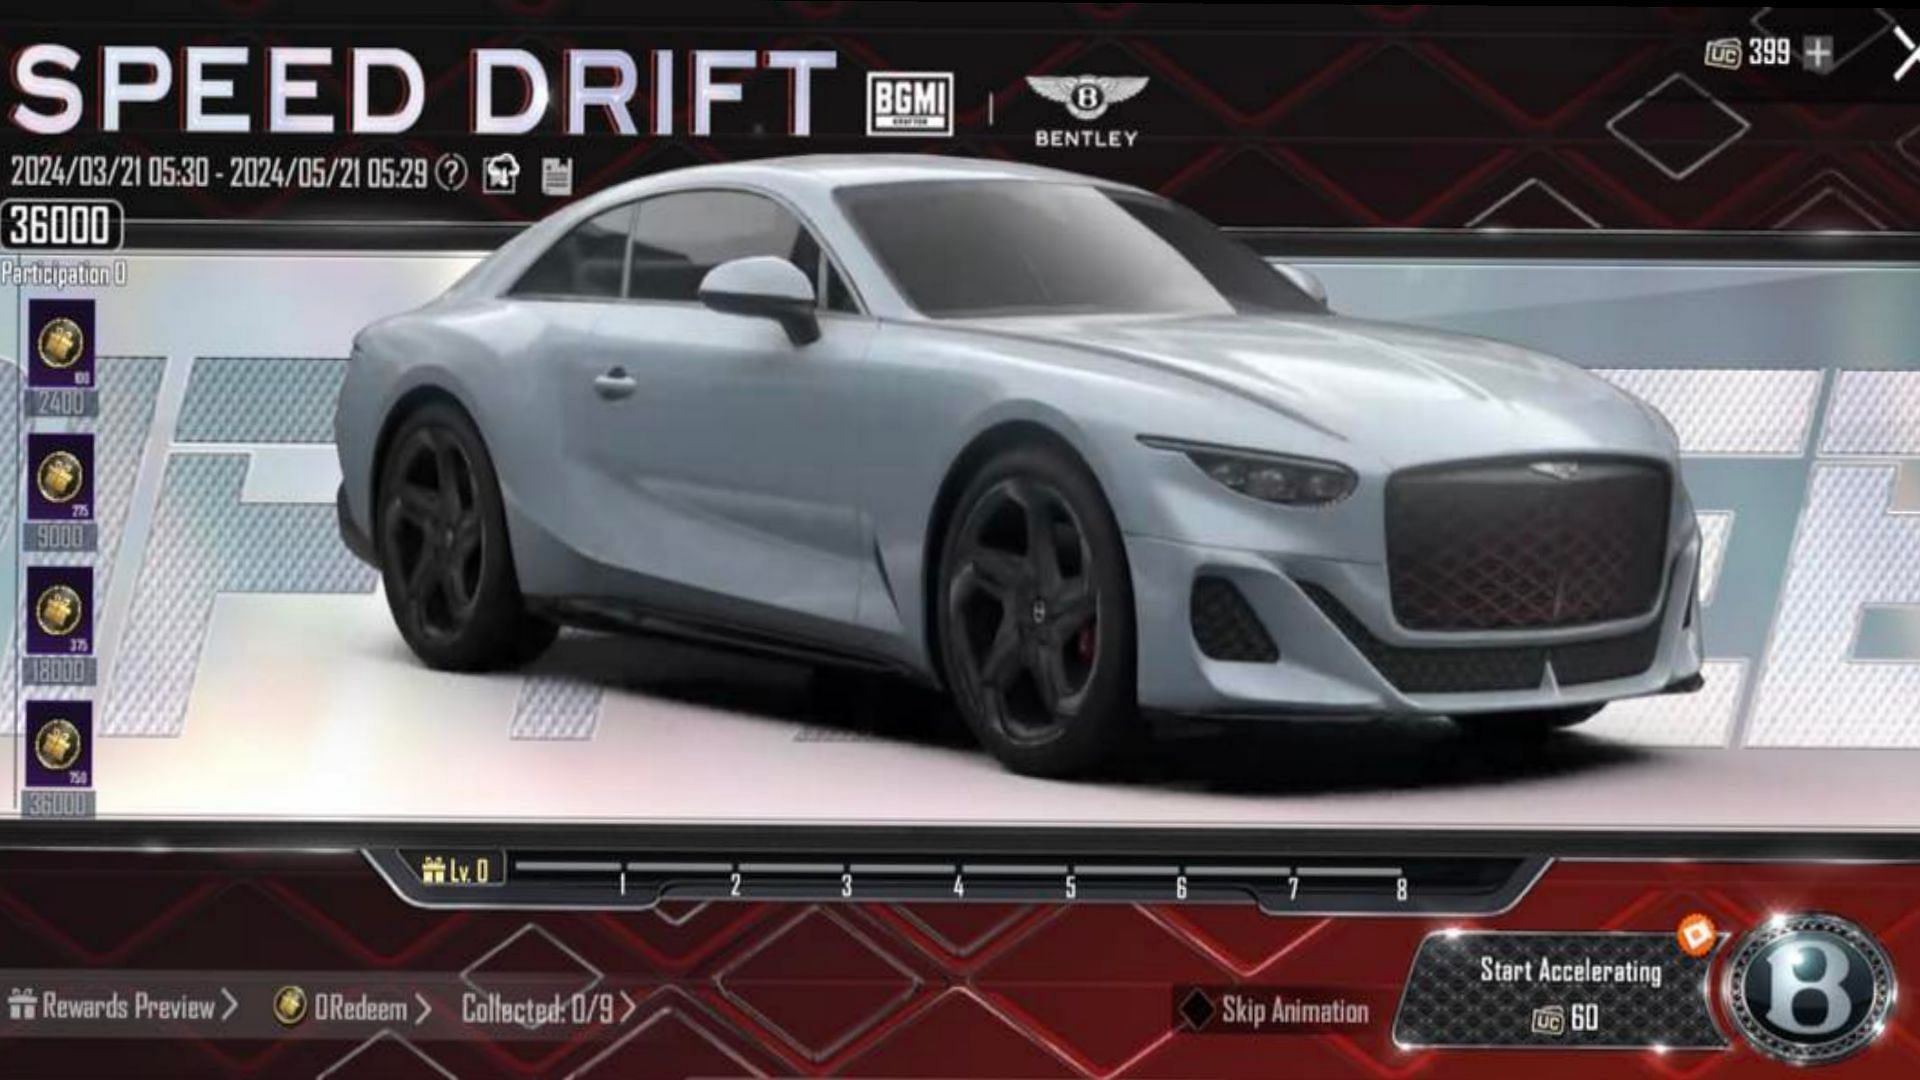 Speed Drift event to get Bentley supercars in BGMI (Image via Krafton)